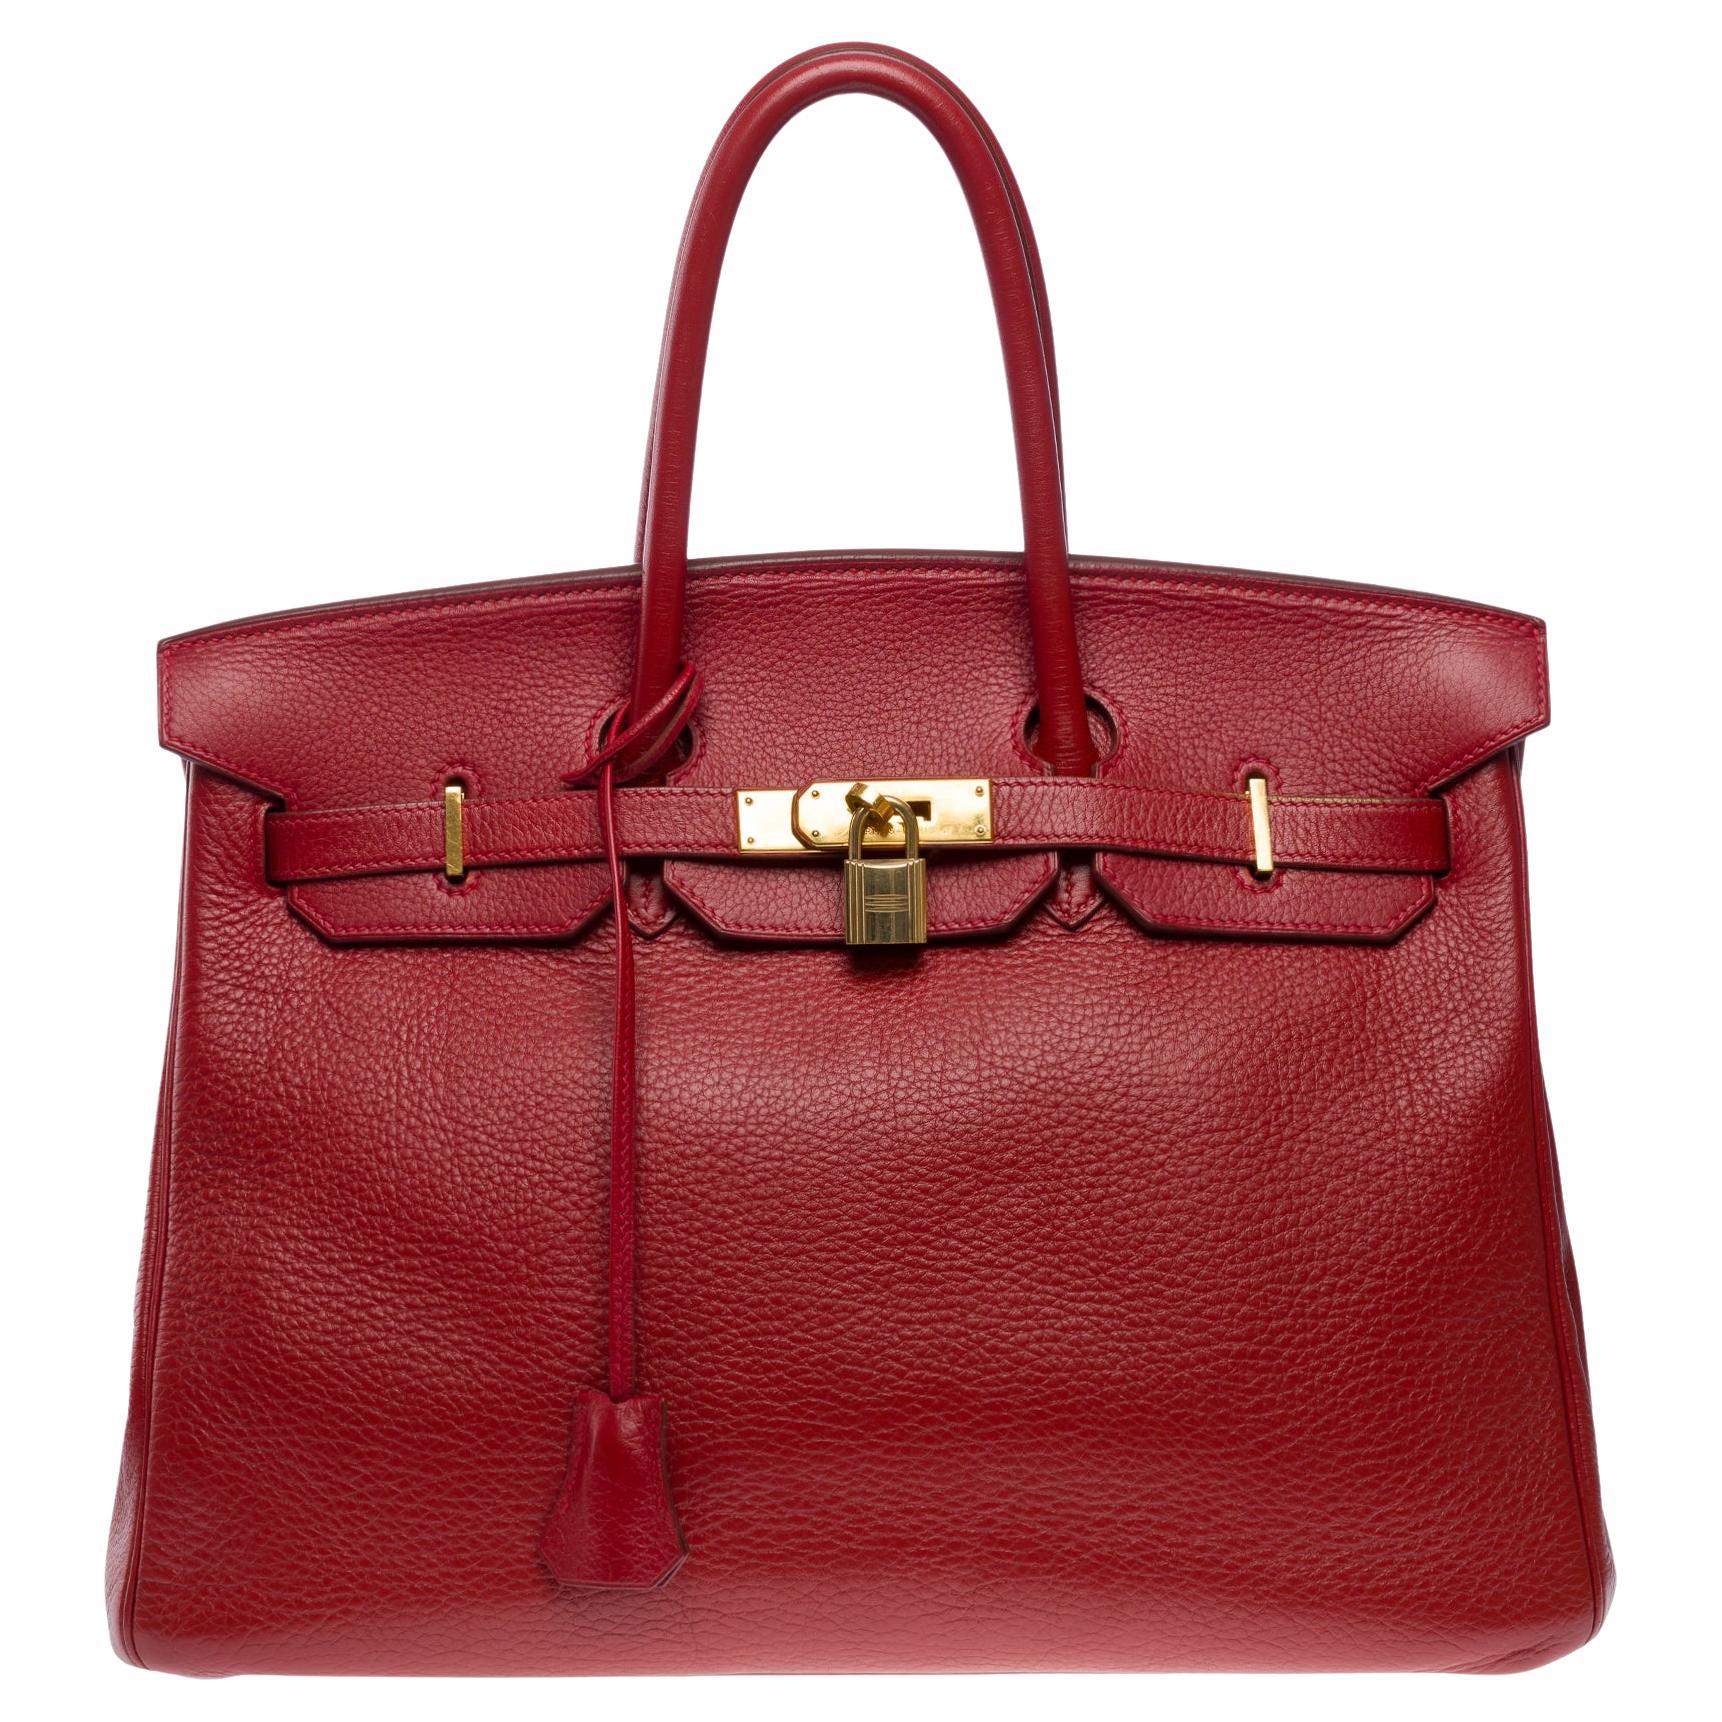 Stunning Hermès Birkin 35 handbag in Rouge Garance Togo leather, GHW For Sale